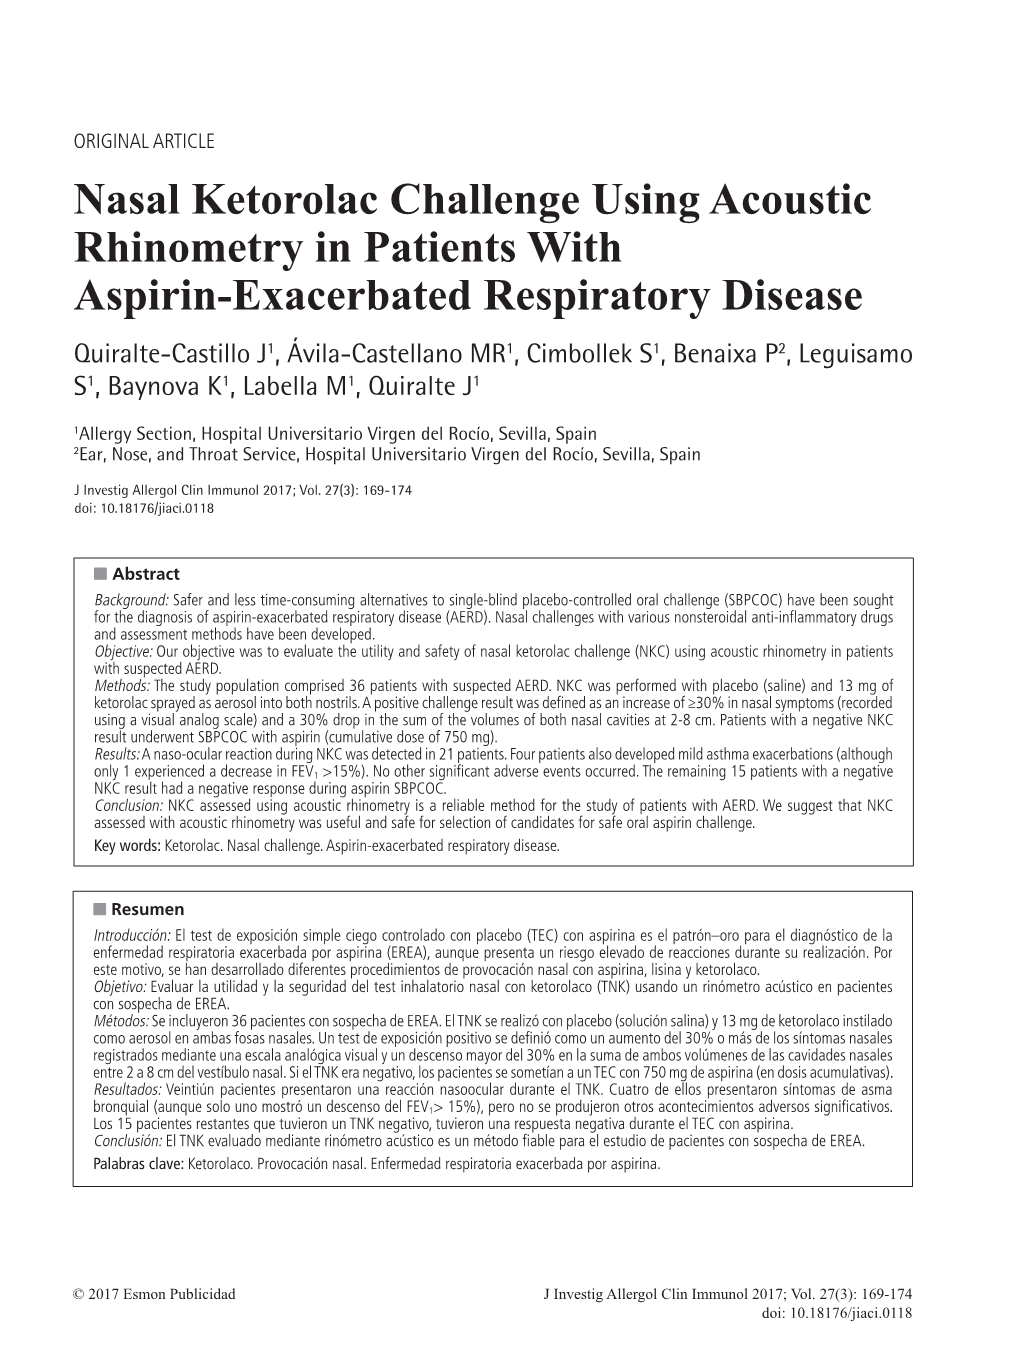 Nasal Ketorolac Challenge Using Acoustic Rhinometry in Patients